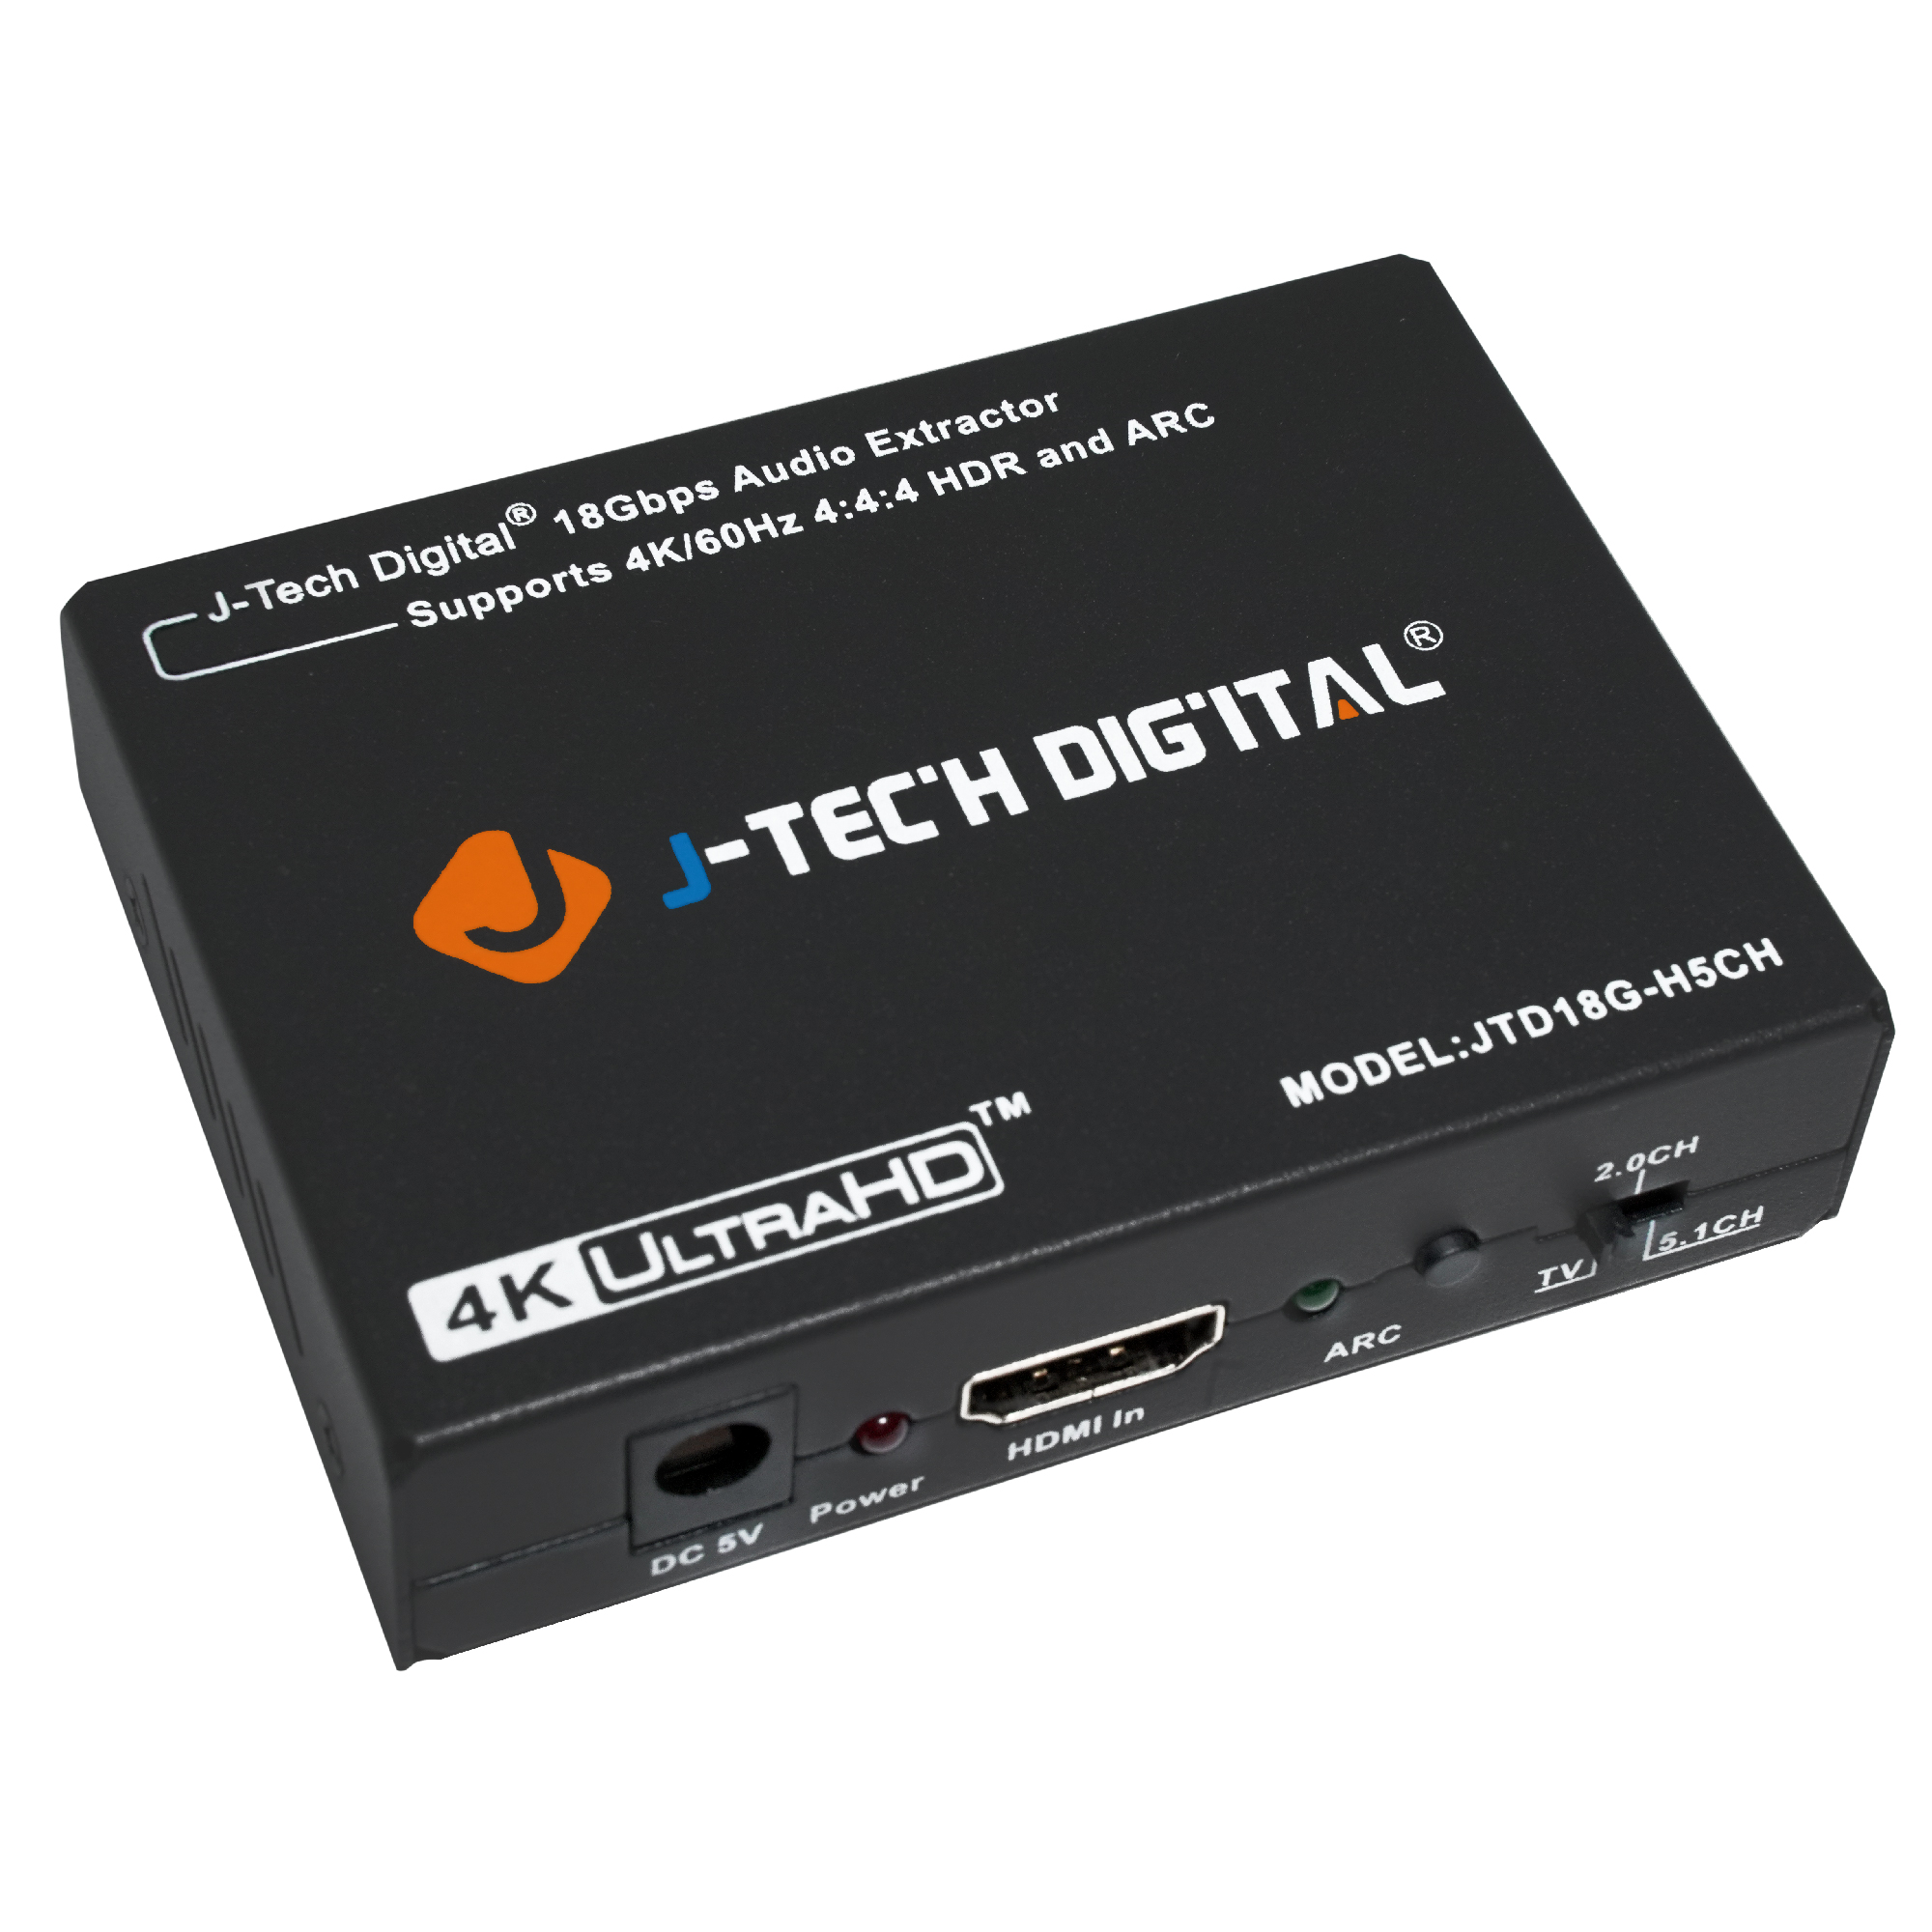 HDMI-ARC HDMI 2.0 Audio Converter SPDIF + Jack Output HDR10 [JTD18G-H5CH2] - Digital